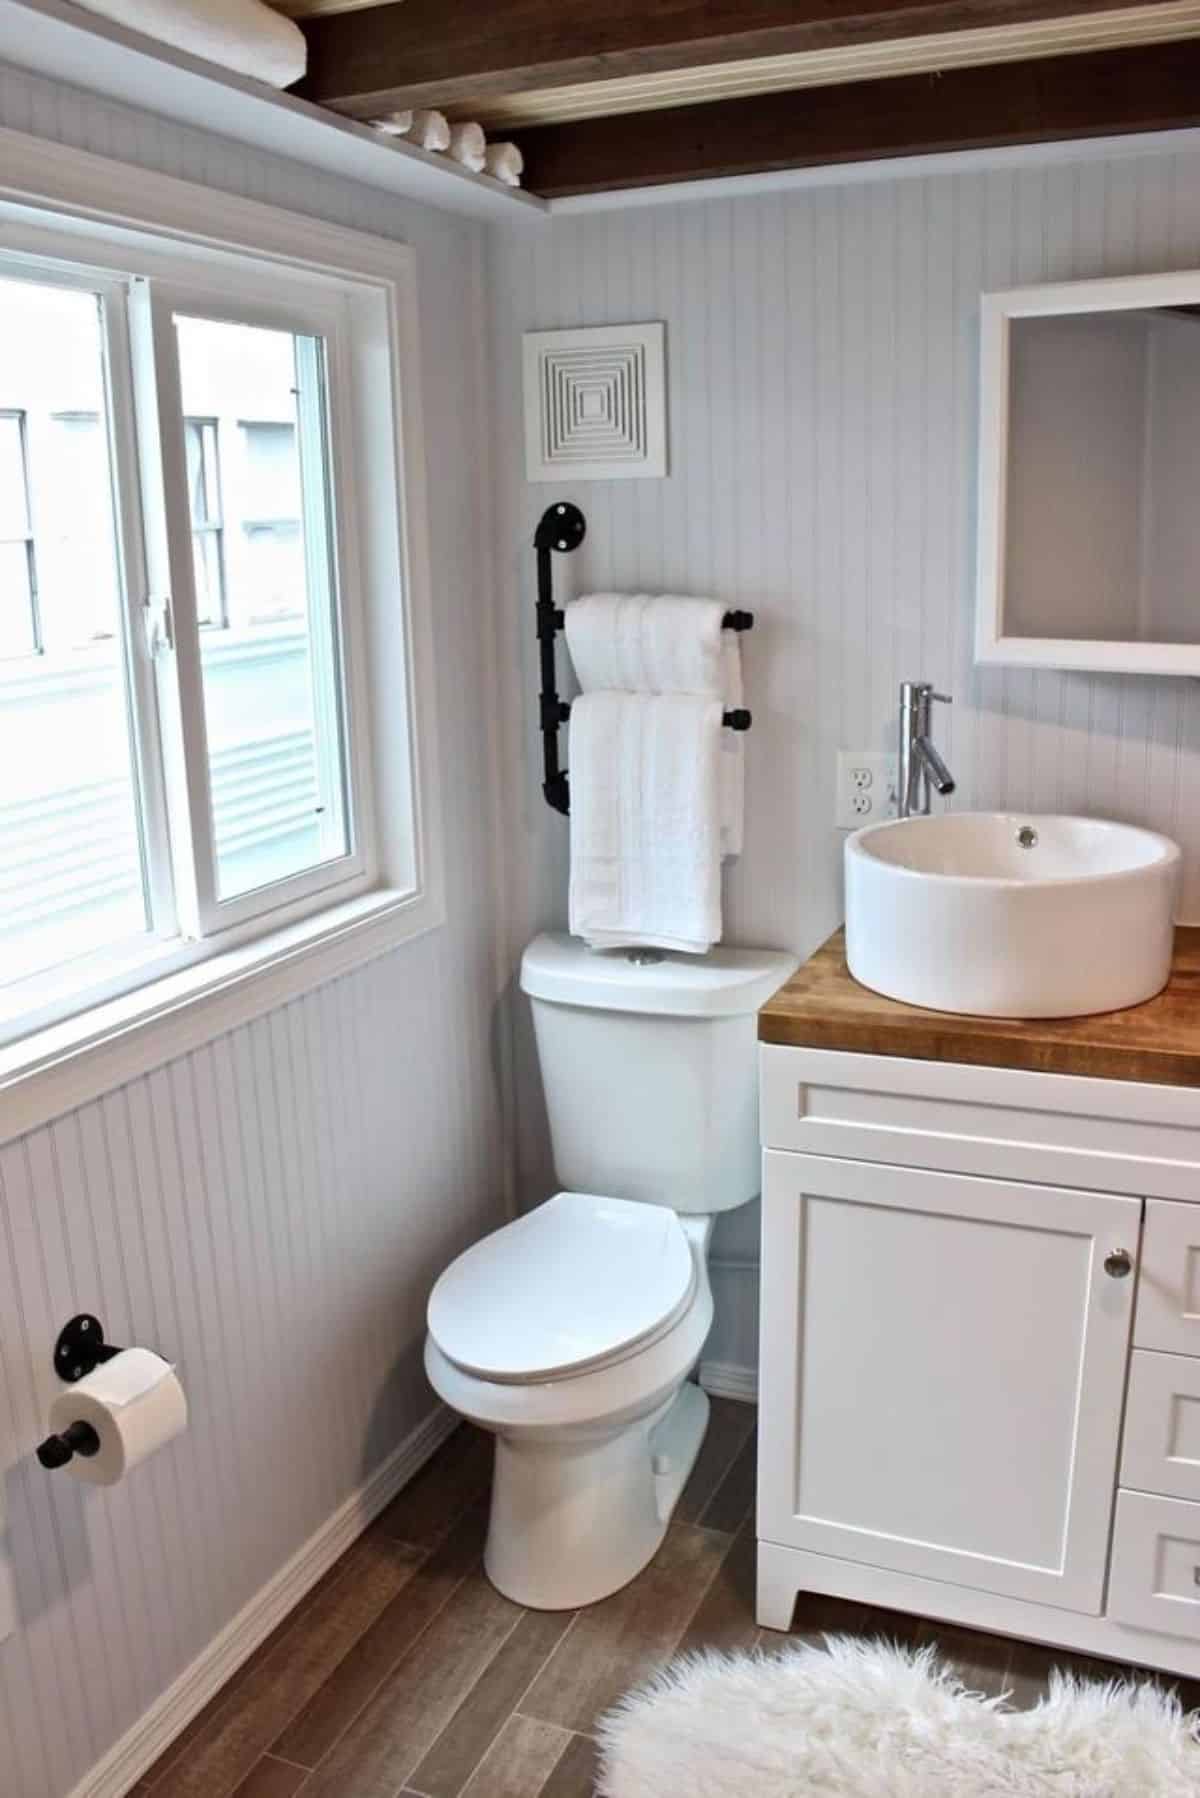 Standard toilet, sink with vanity & mirror in bathroom of Certified Durable Tiny Home